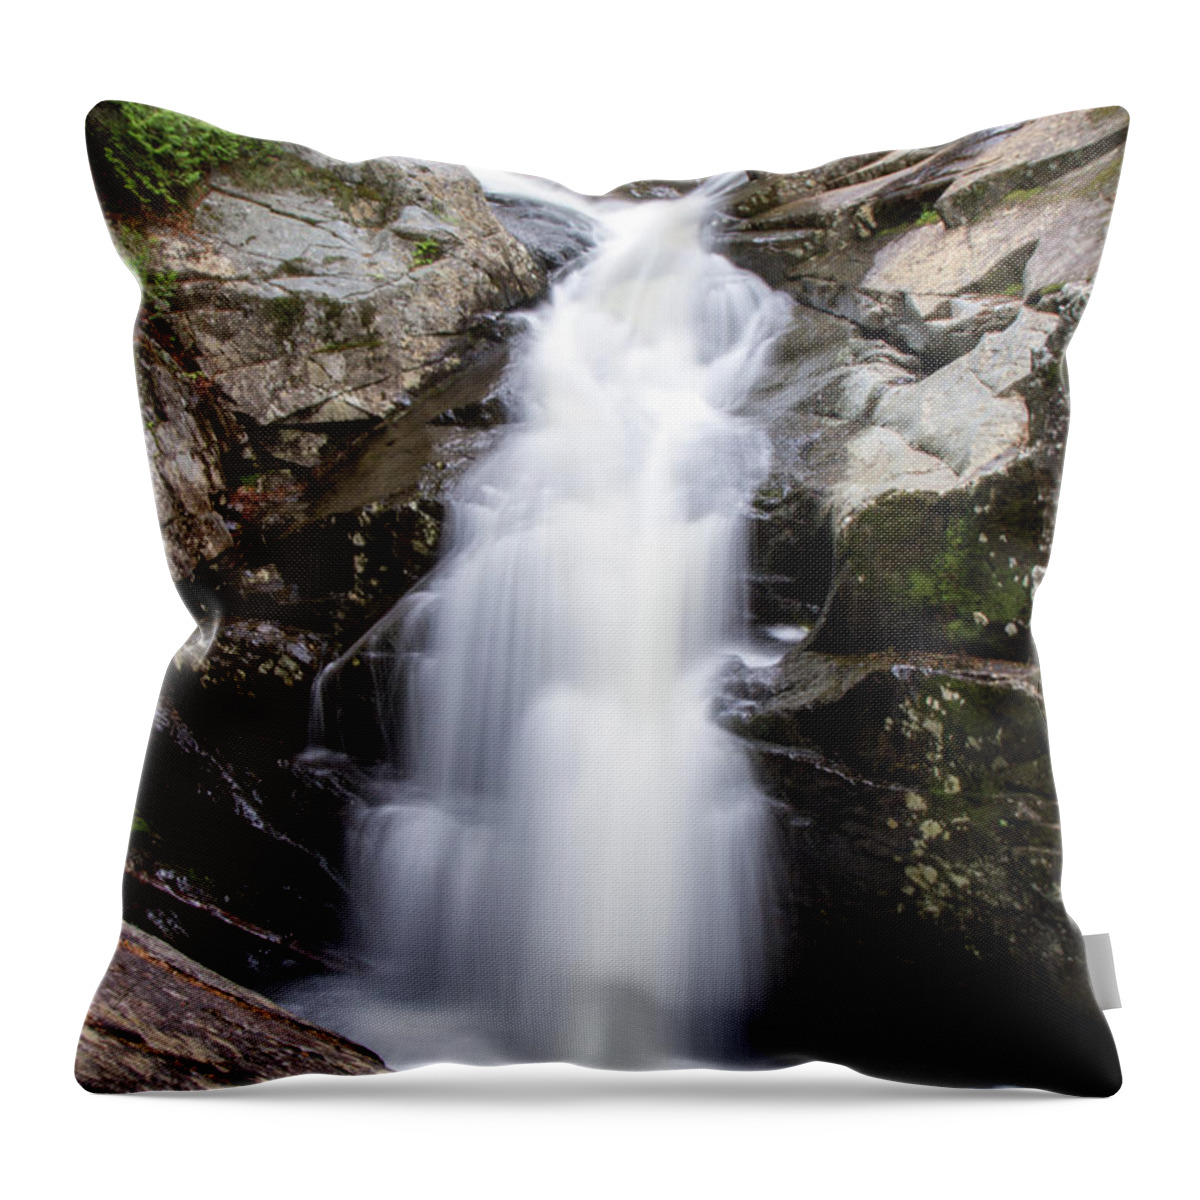 Rangeley Throw Pillow featuring the photograph Gorge Waterfall by Darryl Hendricks